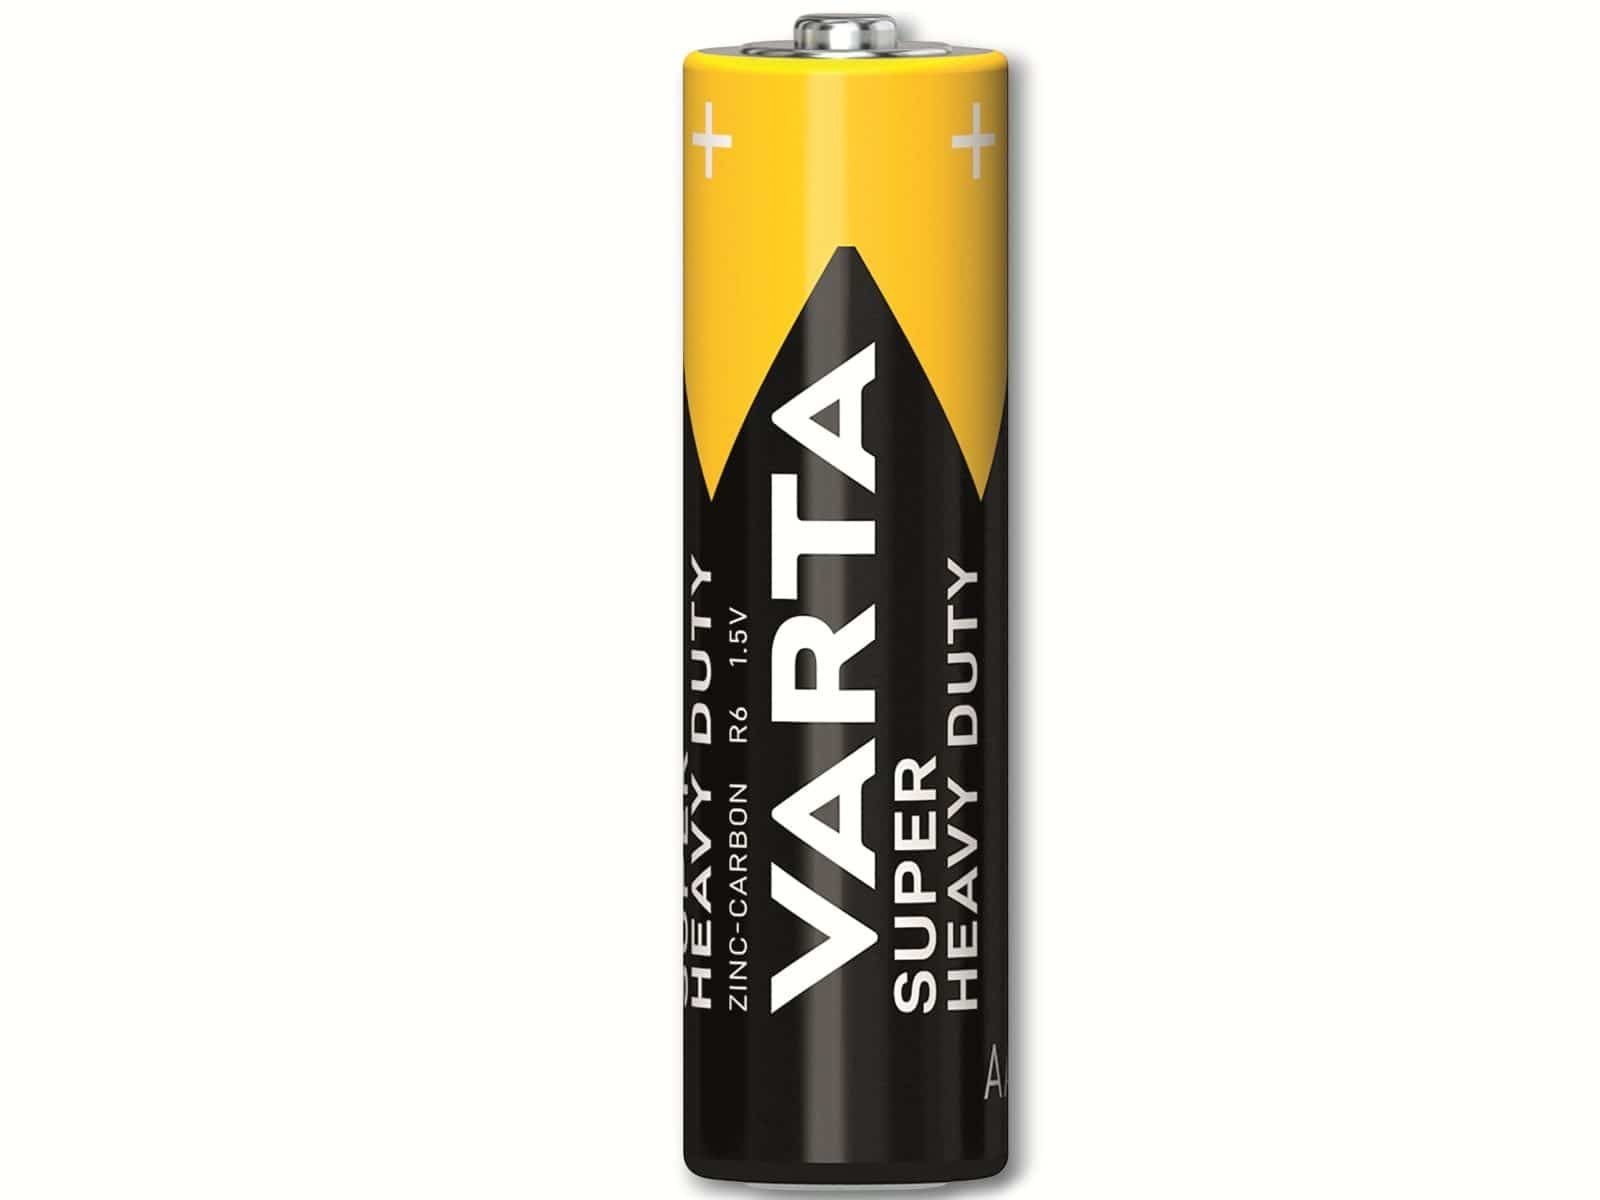 1.5V AA, Mignon, Zink-Kohle, Batterie R06, Batterie VARTA VARTA